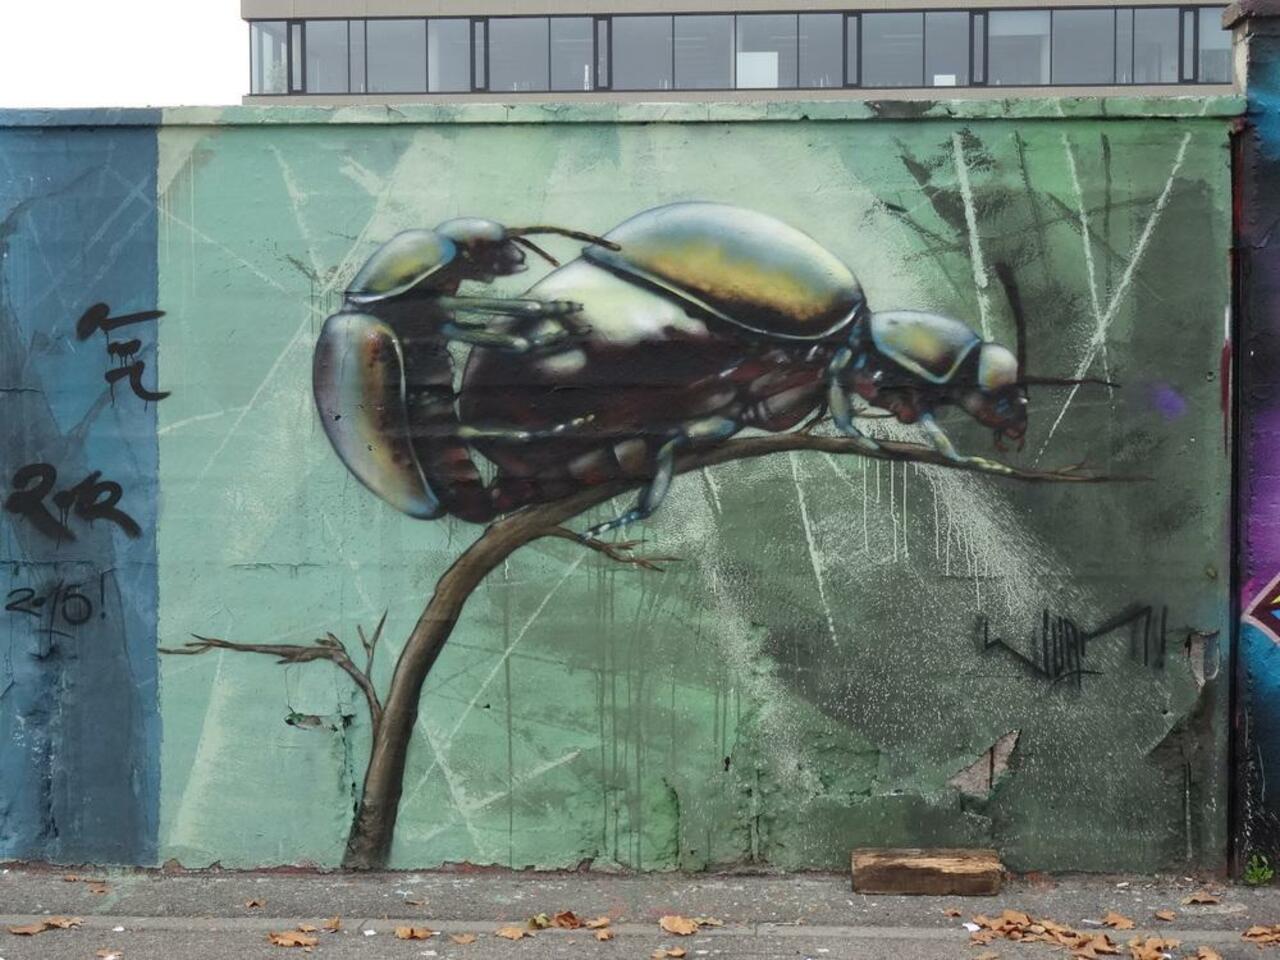 Graffiti Karlsruhe, Germany 
#streetart #art #urbanart #graffiti #karlsruhe https://t.co/U7V812aCUH